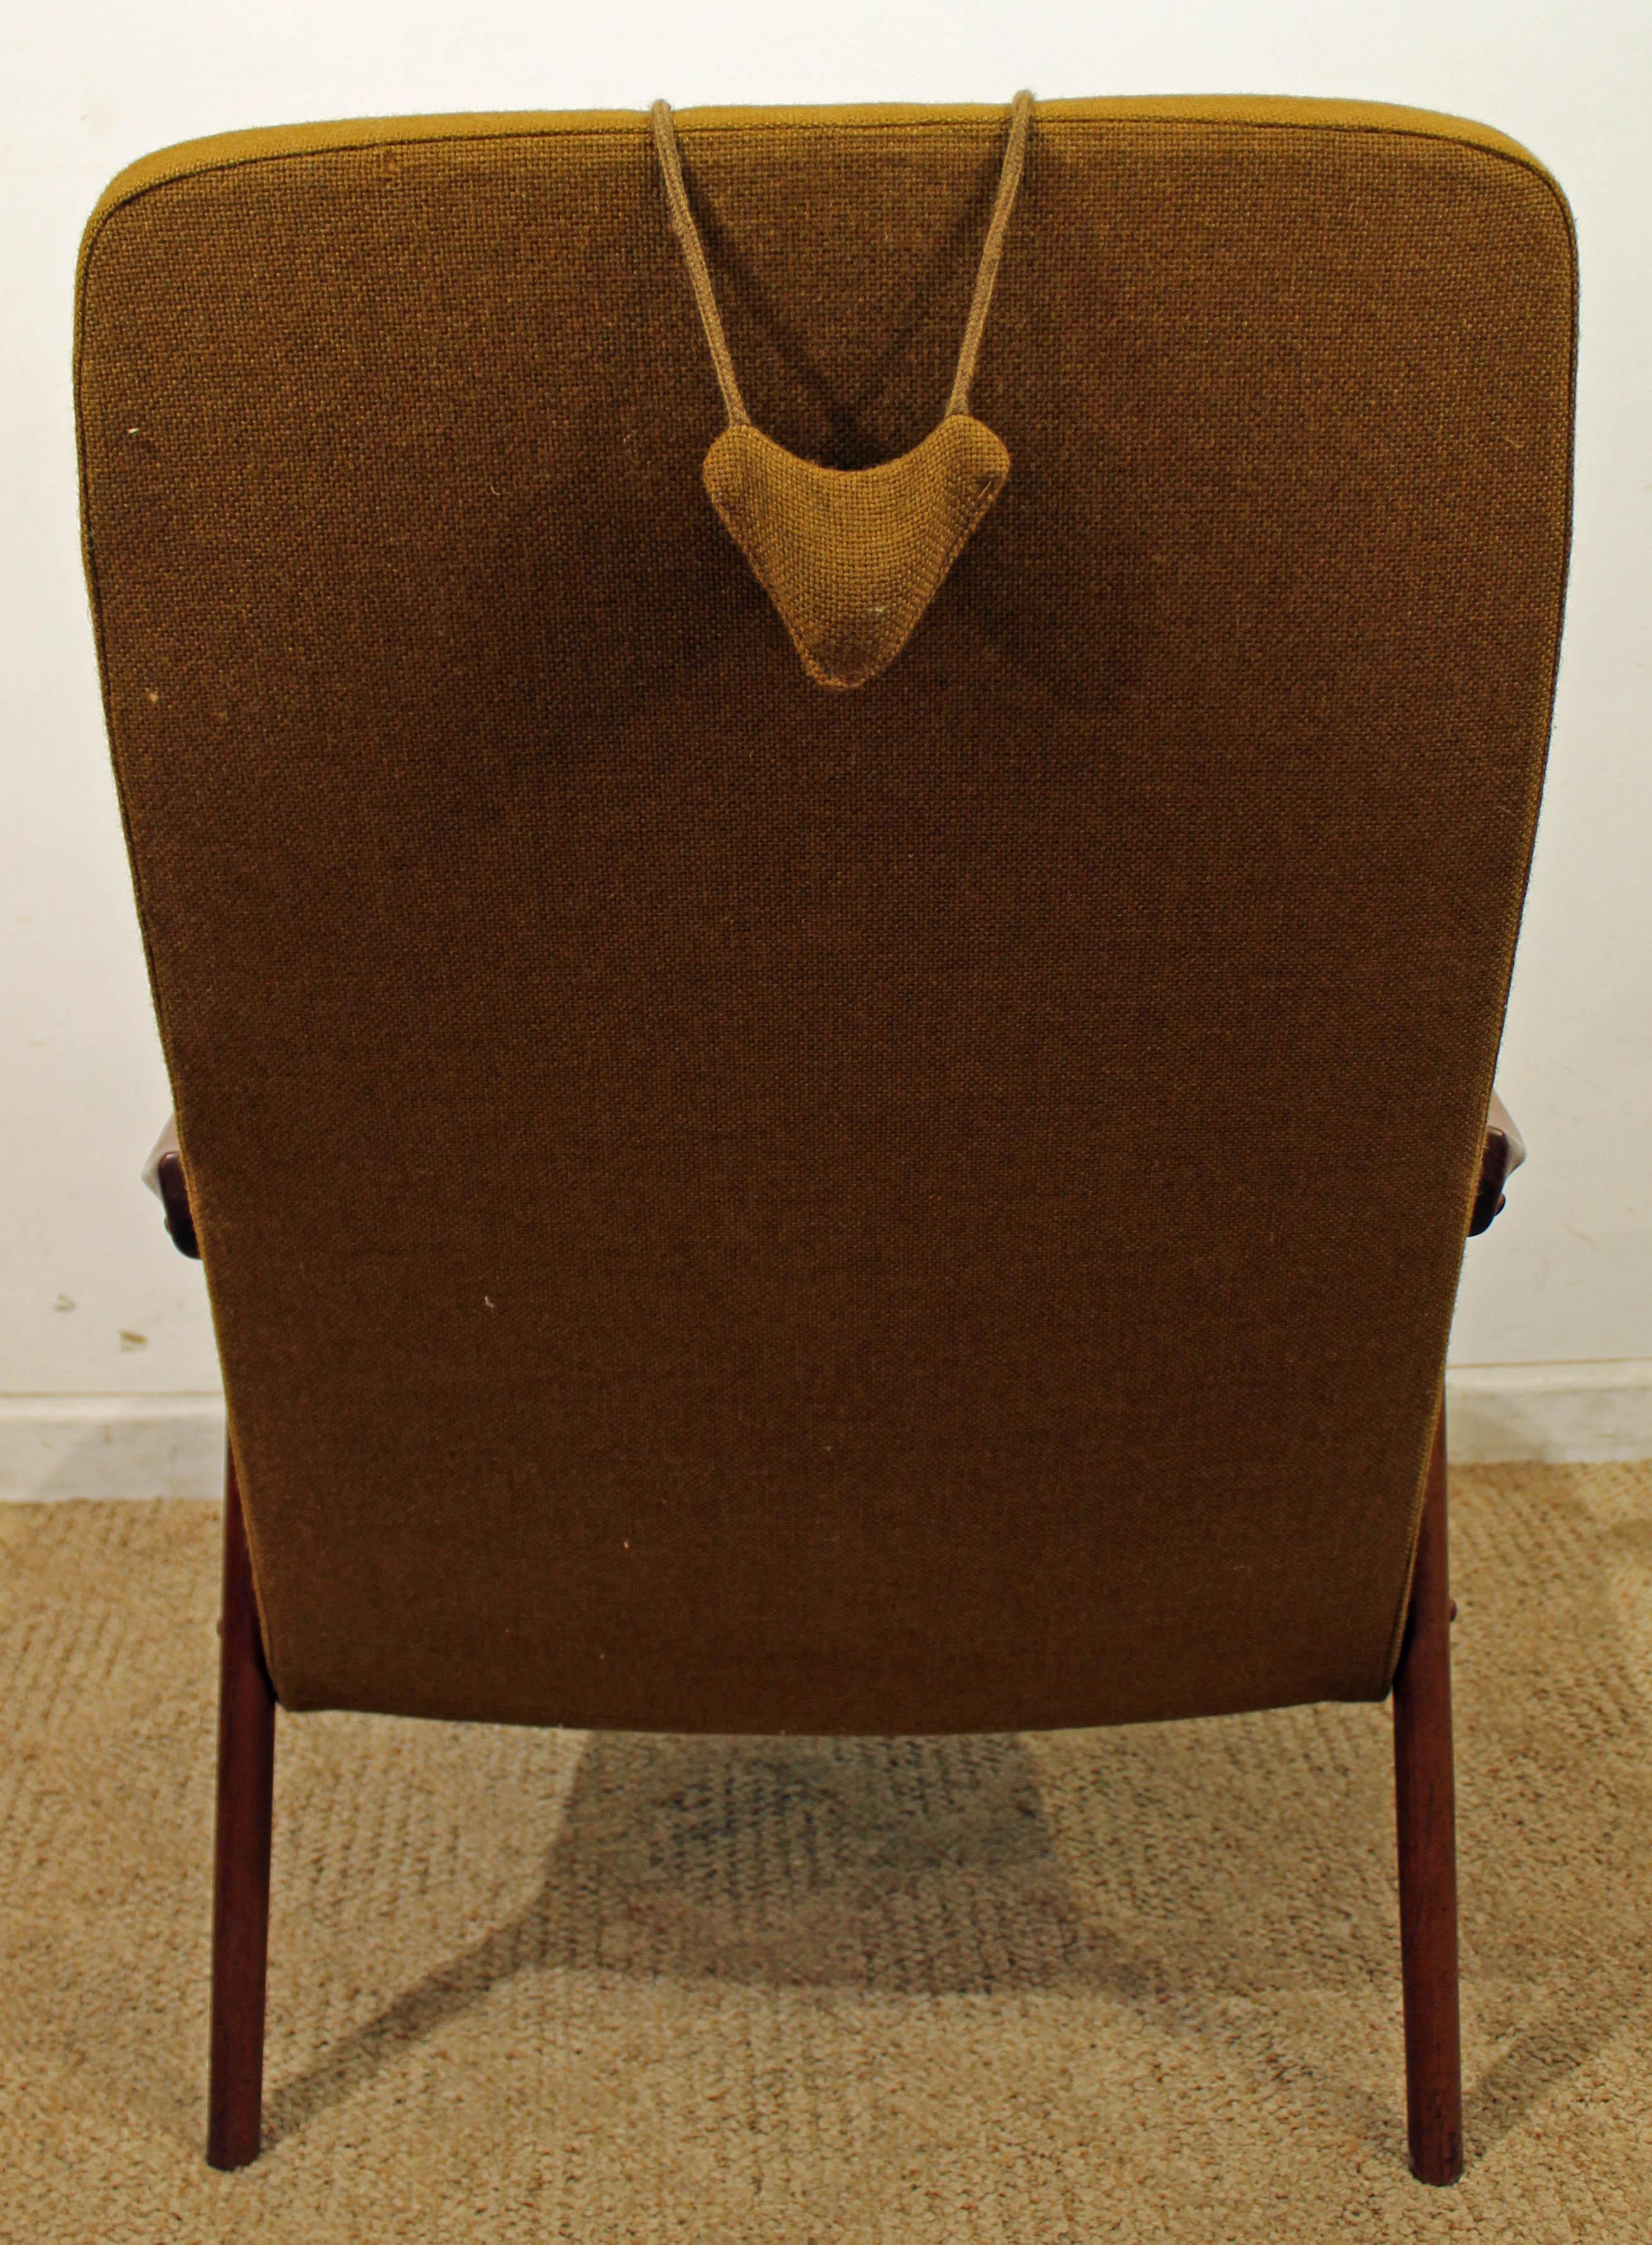 20th Century Midcentury Danish Modern Folke Ohlsson Style Teak Lounge Chair